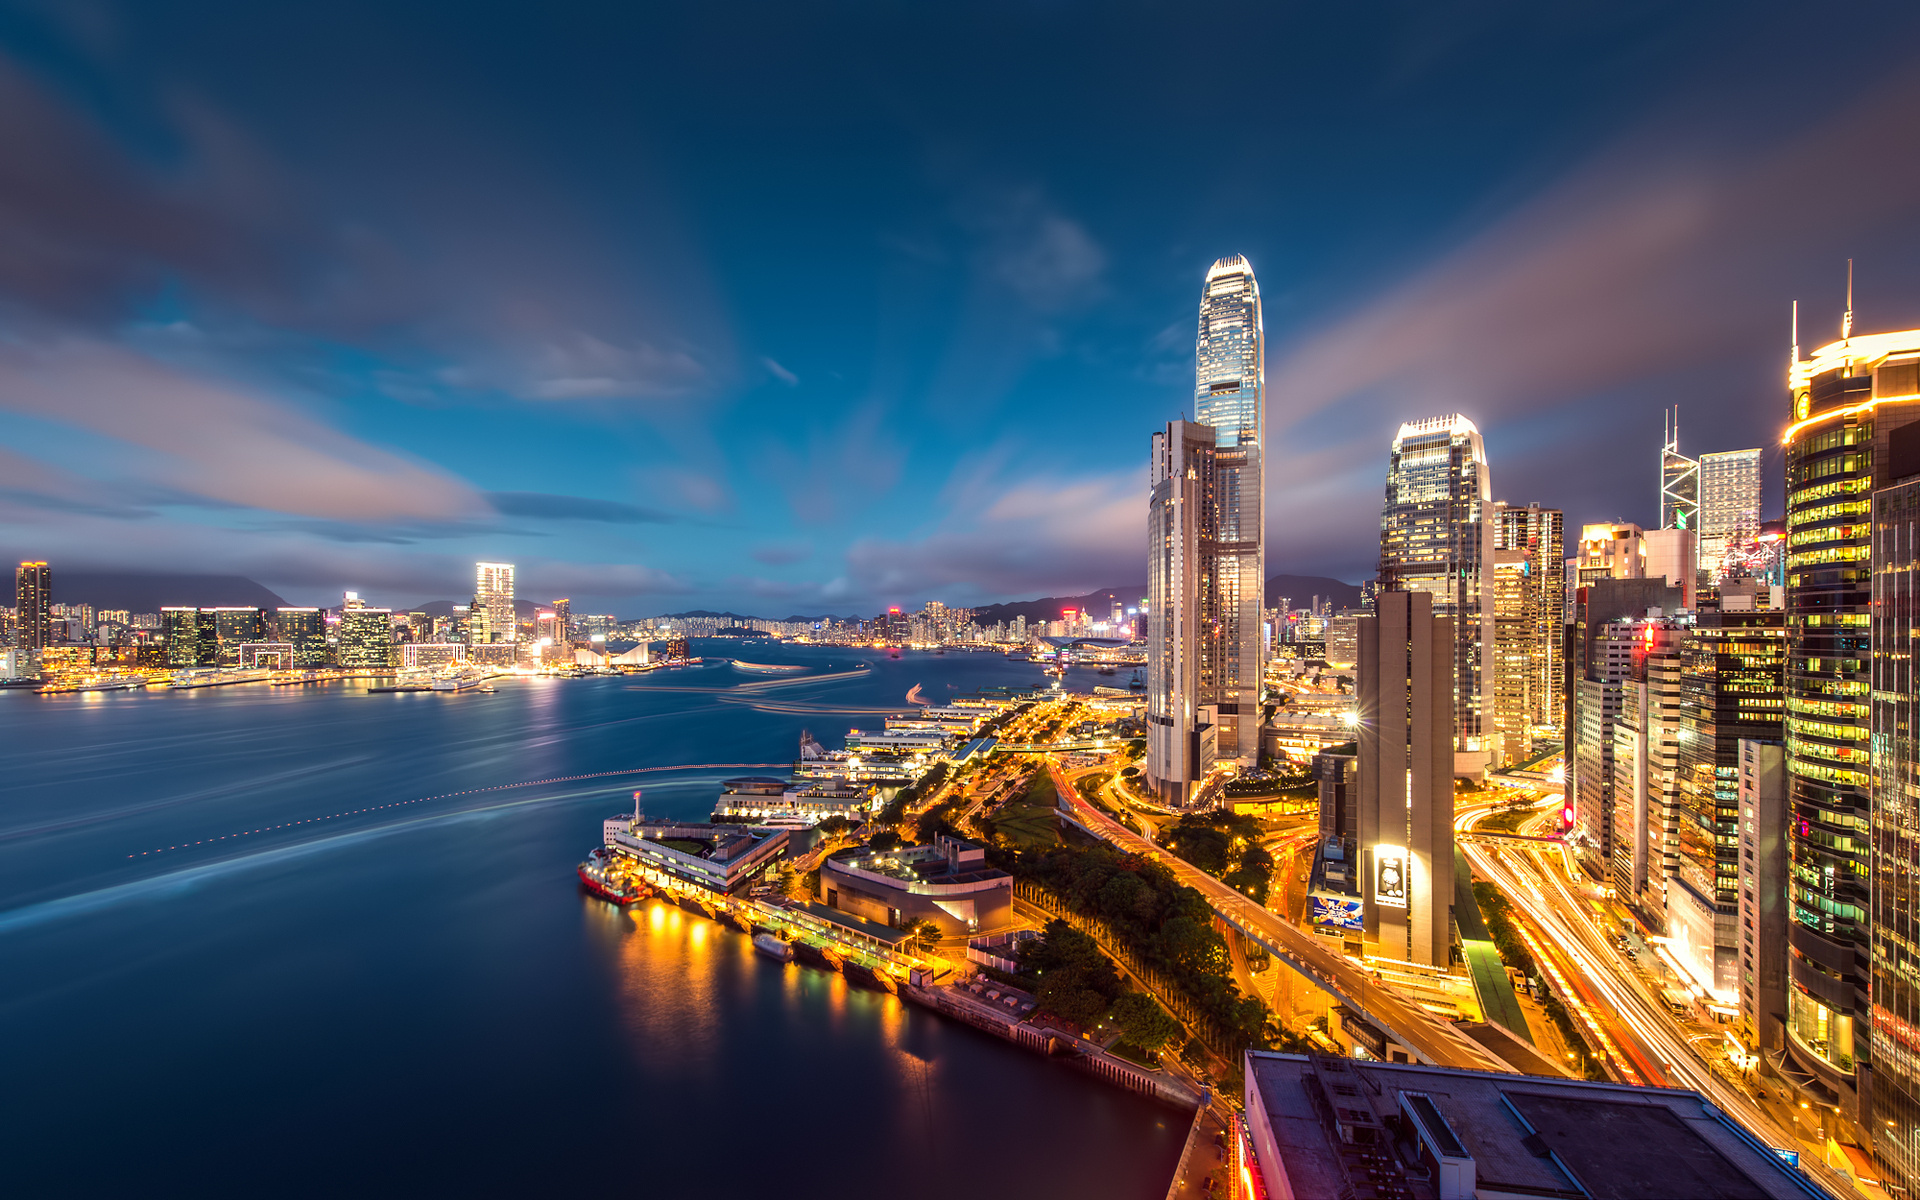 Fond d'ecran Skycrappers Hong Kong de nuit